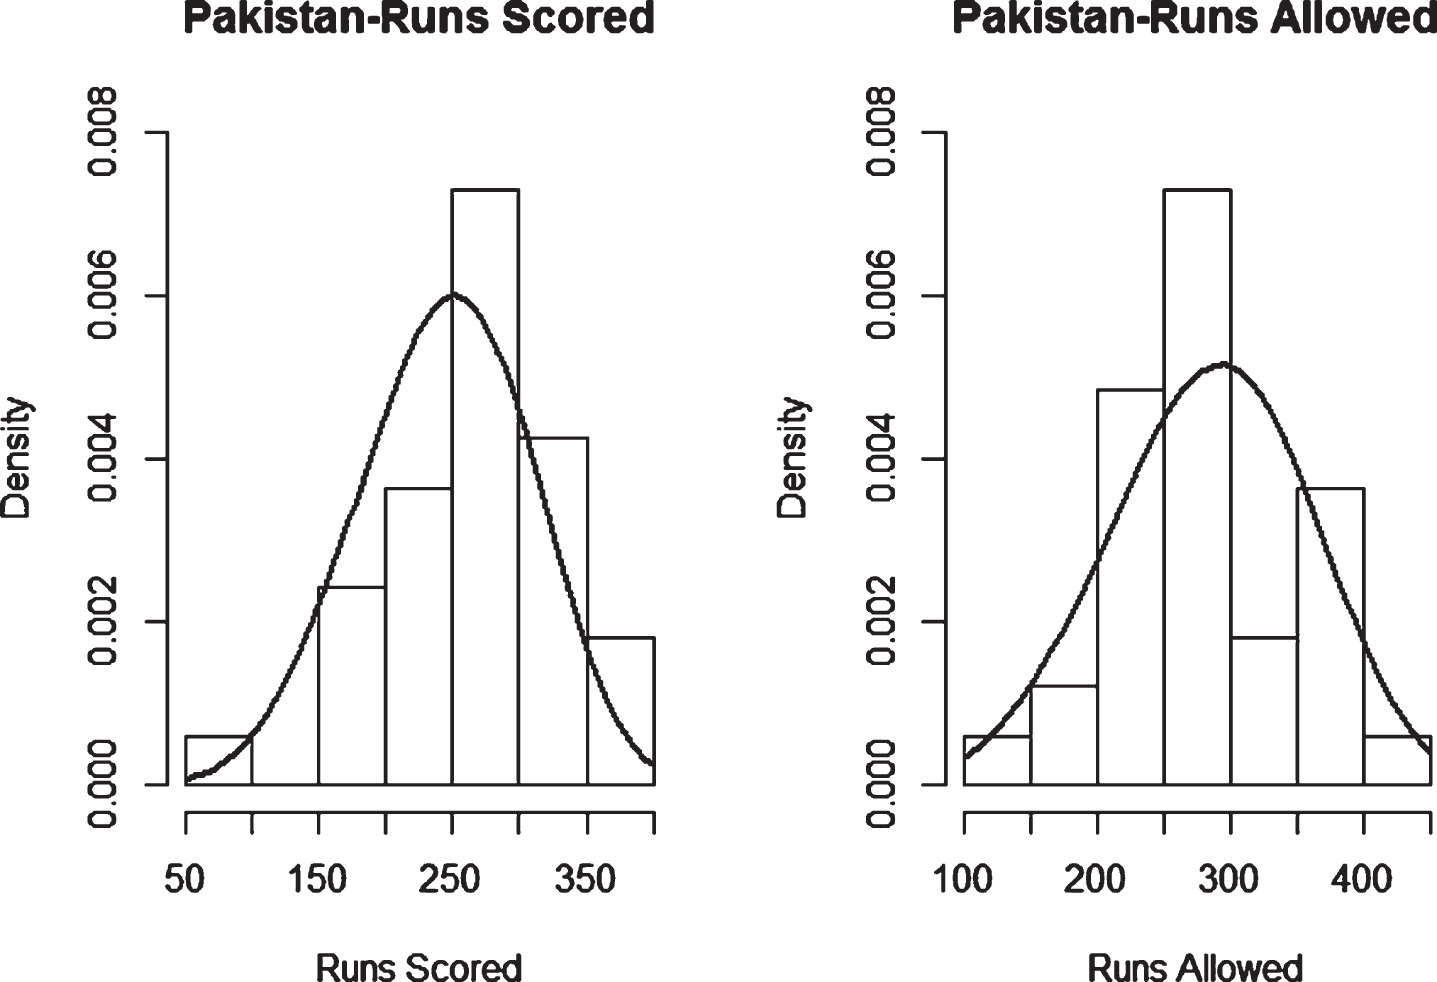 Weibull Distribution Fit for Runs Scored and Runs Allowed for Pakistan using Maximum Likelihood Method (ODI).